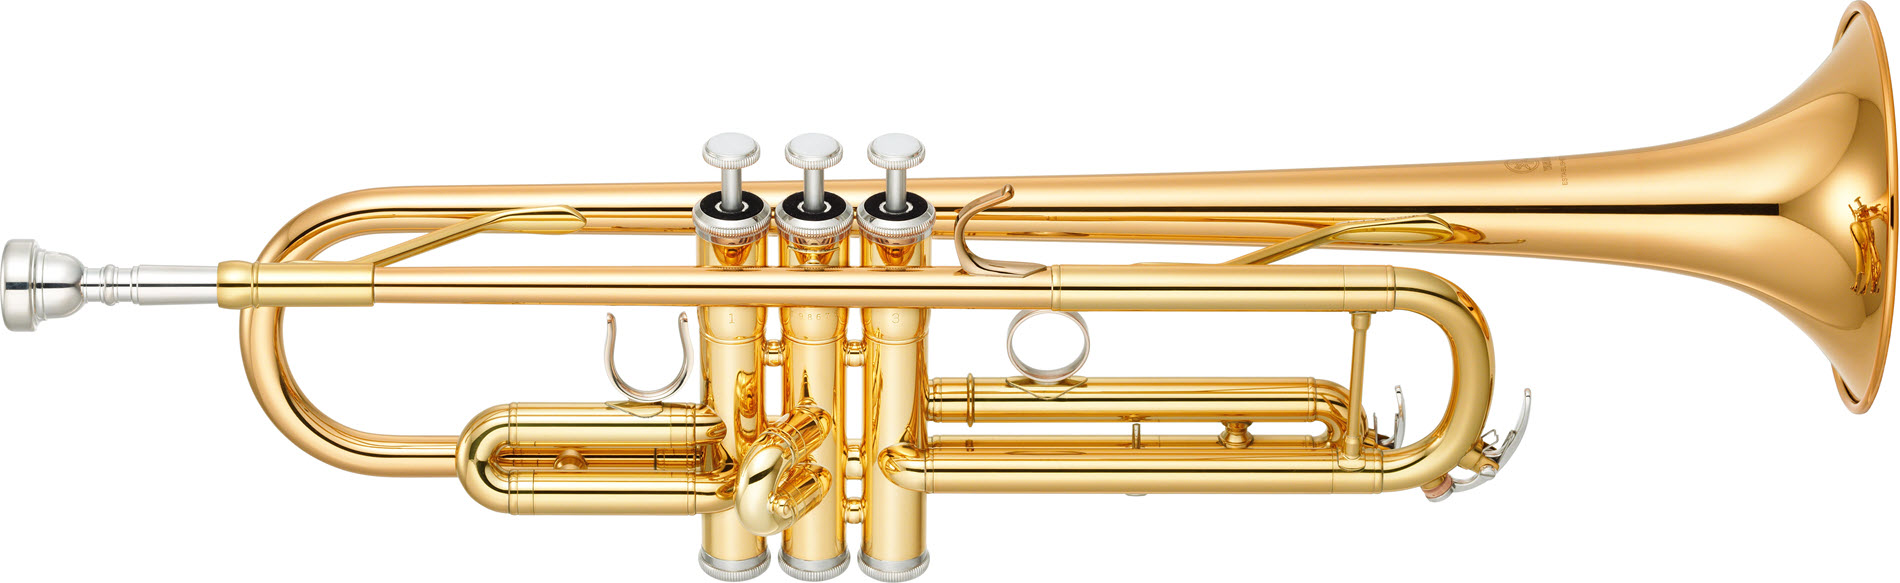 Gold trumpet in profile.